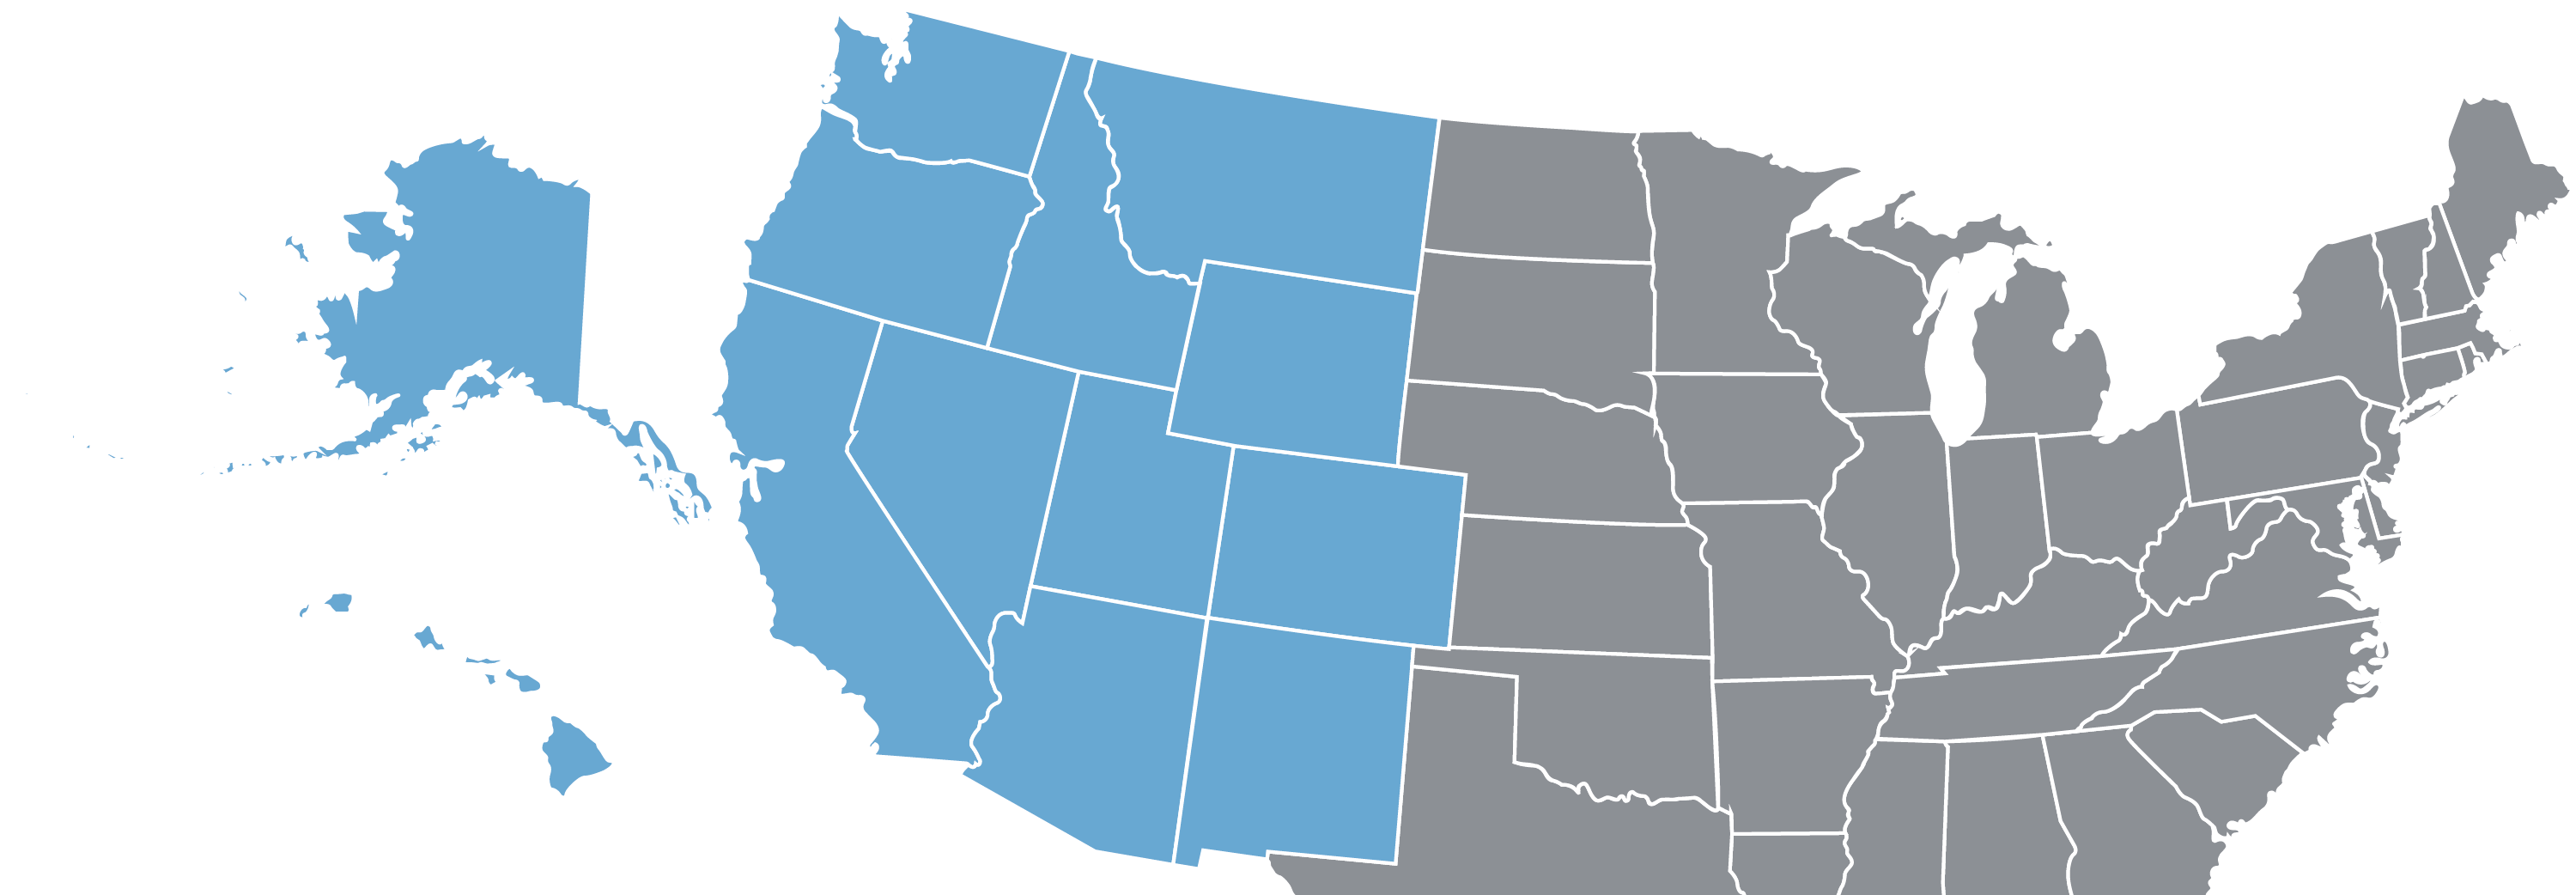 Western United States. West States. Western Regions. Western states